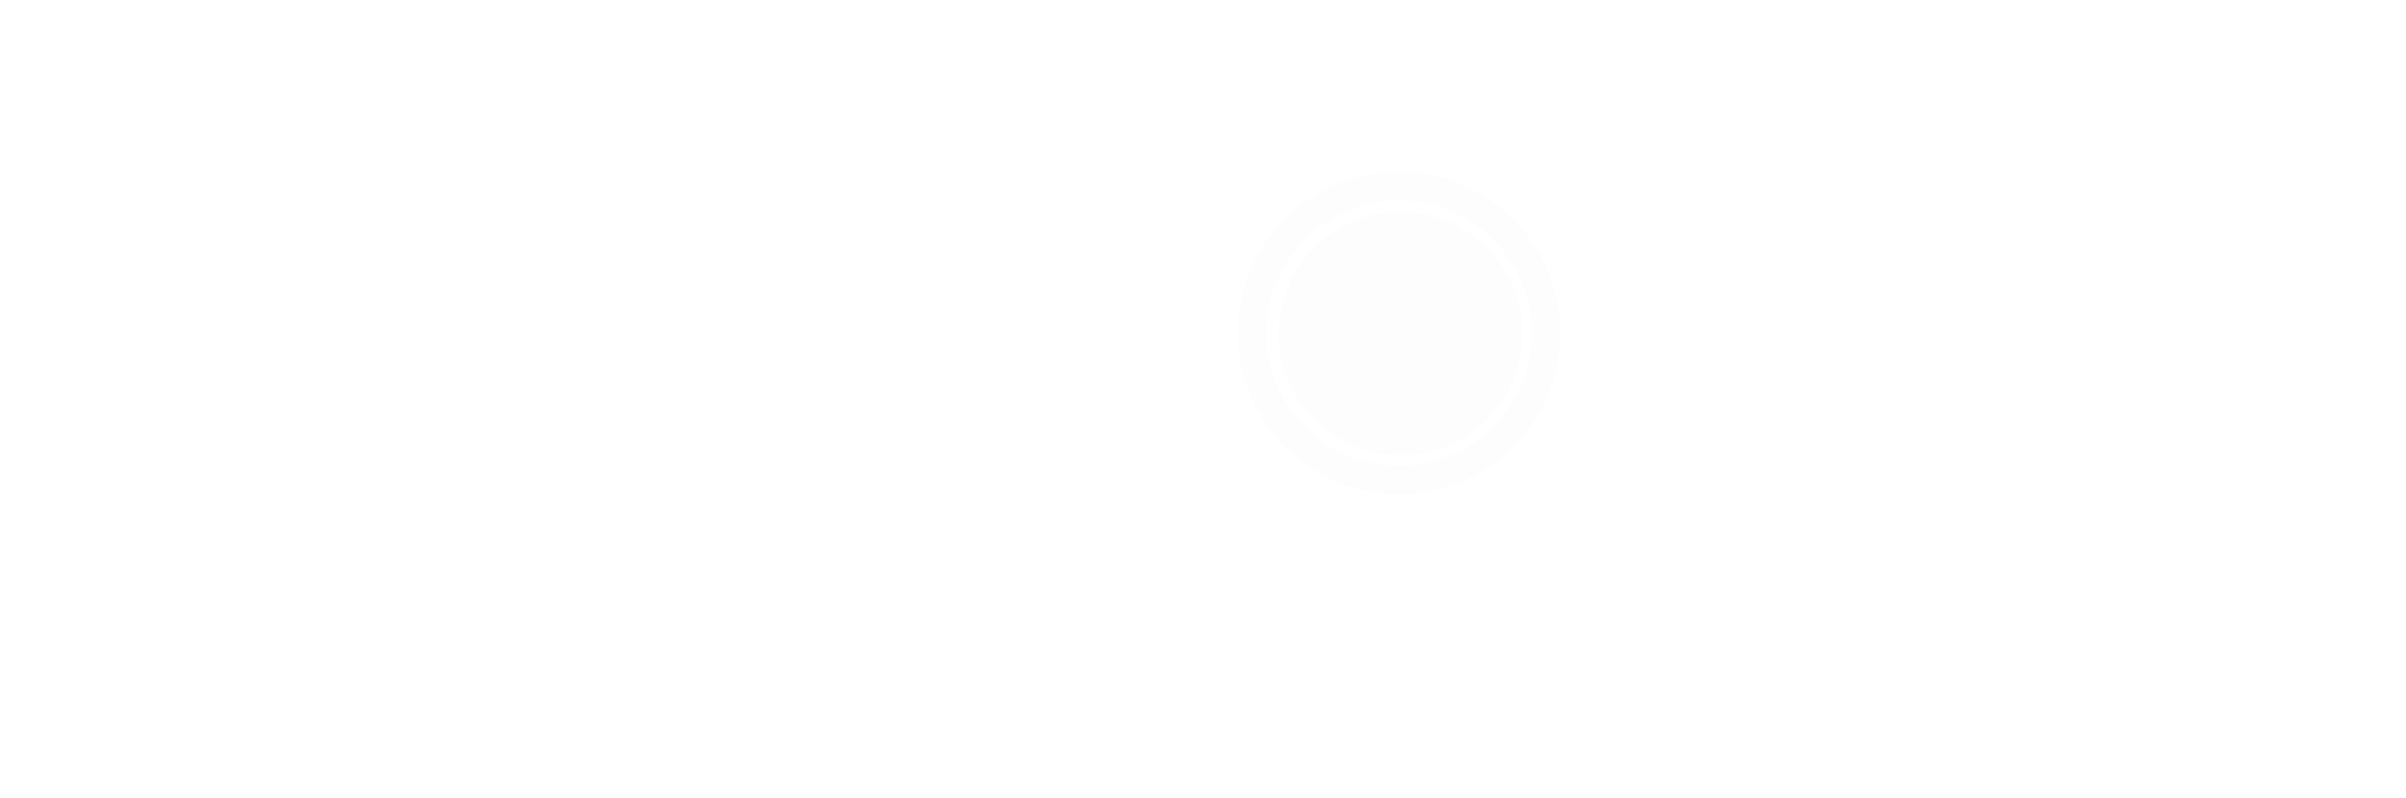 LifePoint Fellowship Church